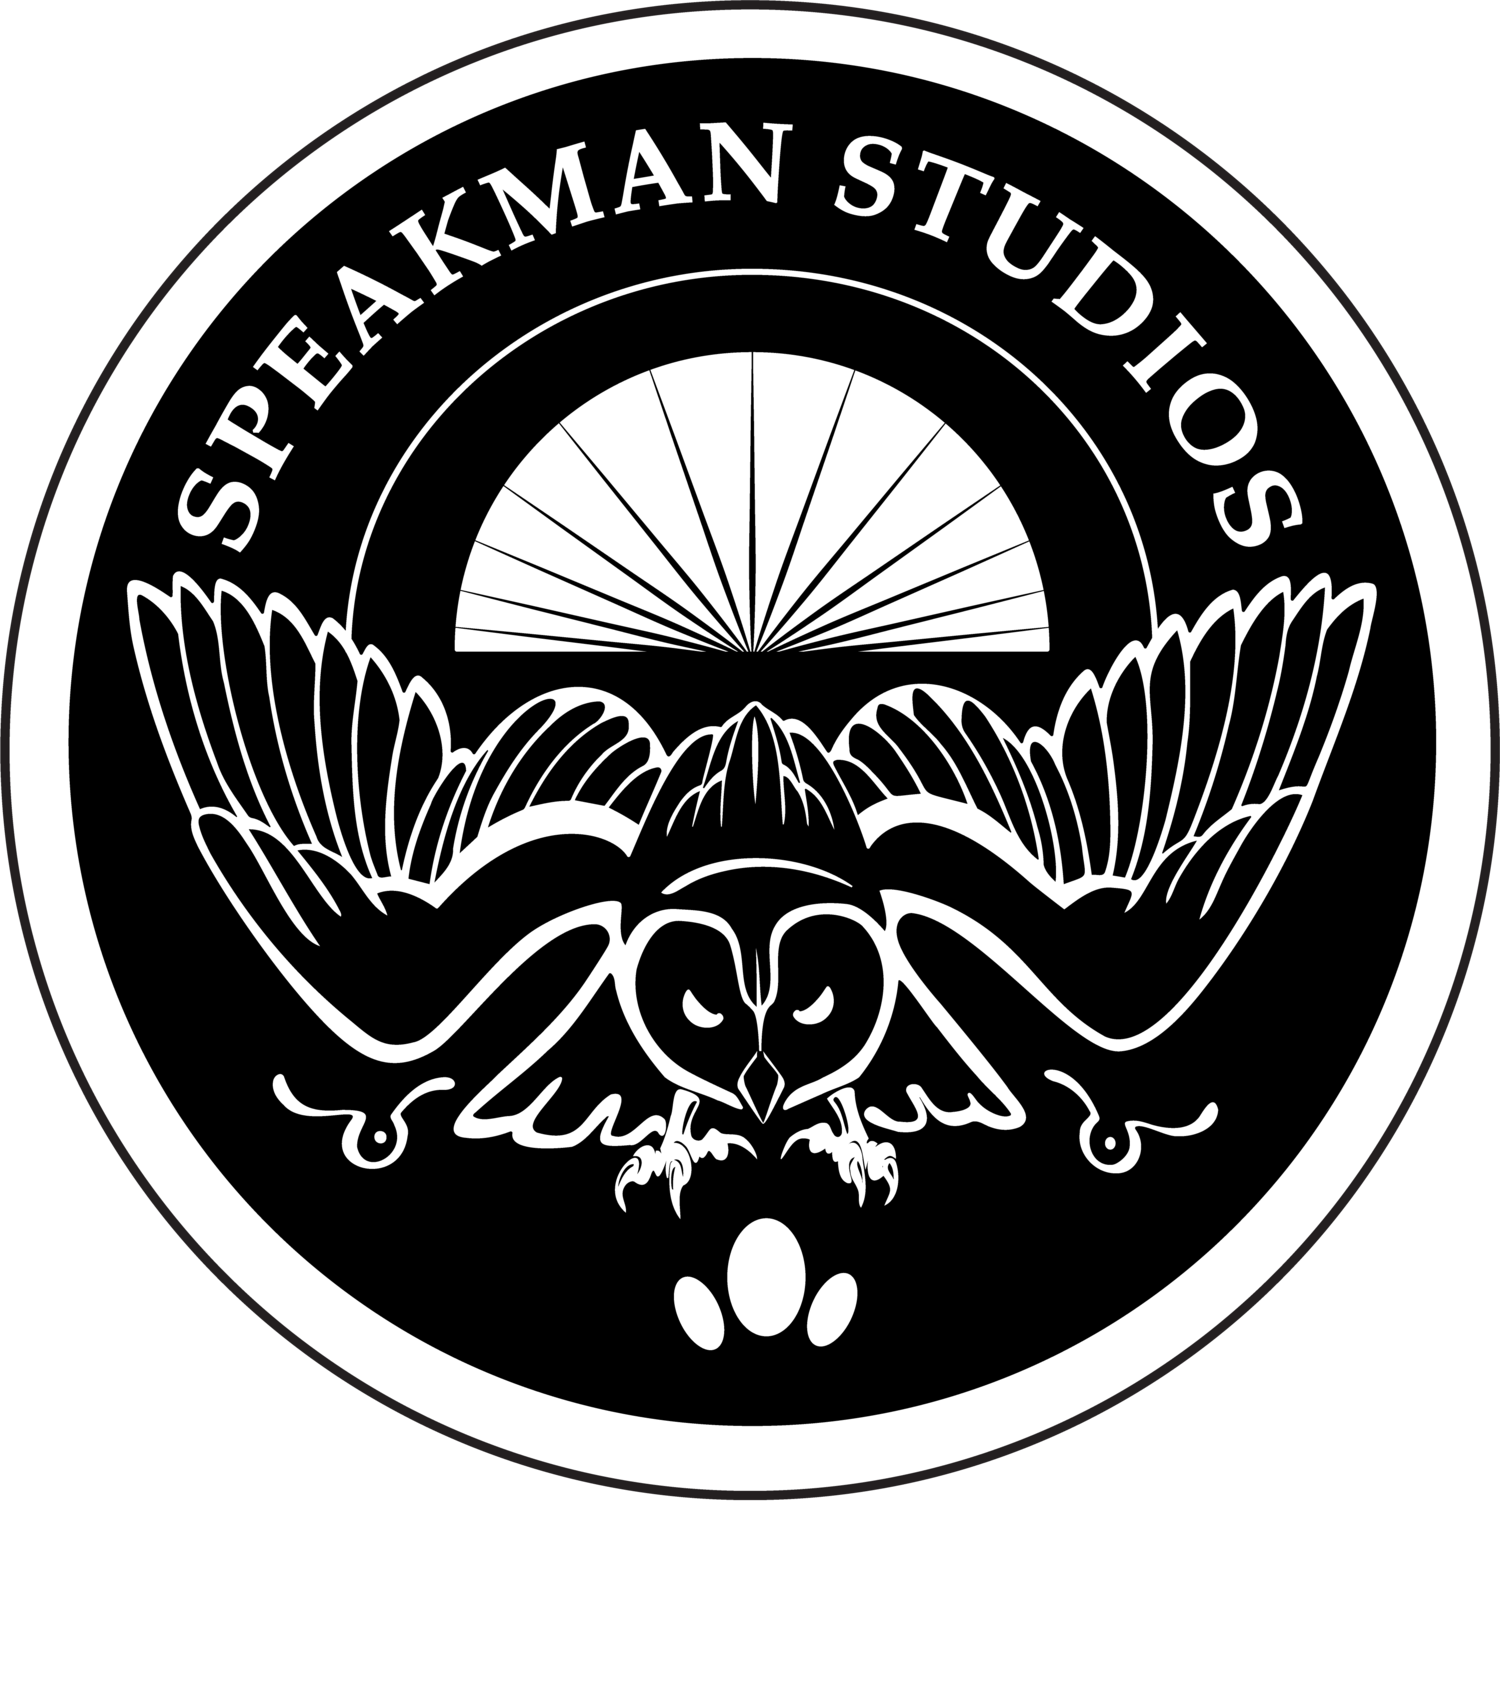 Speakman Studios